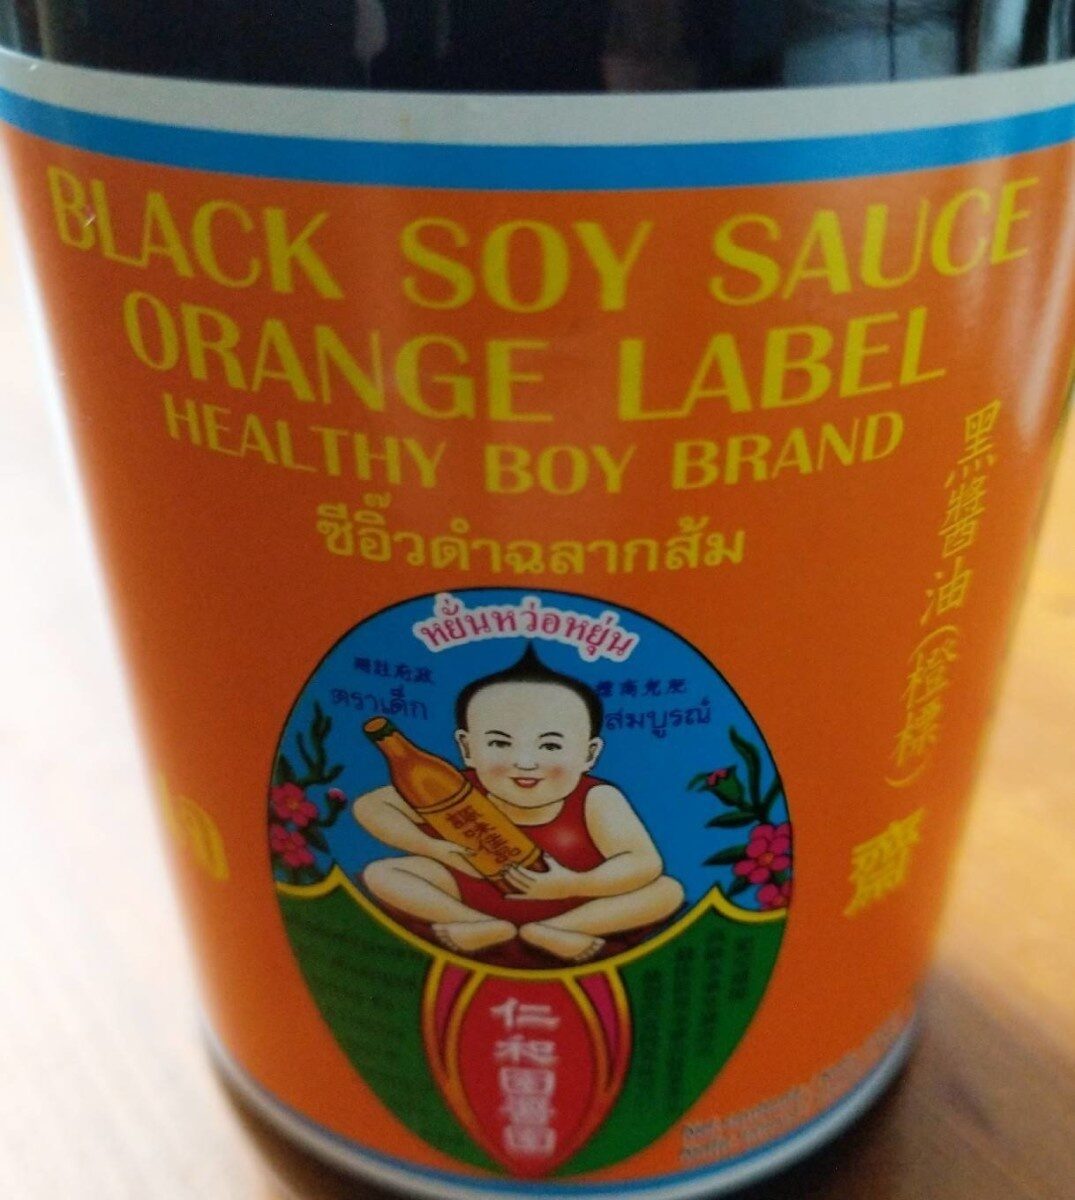 Black soy sauce orange label - Produit - th